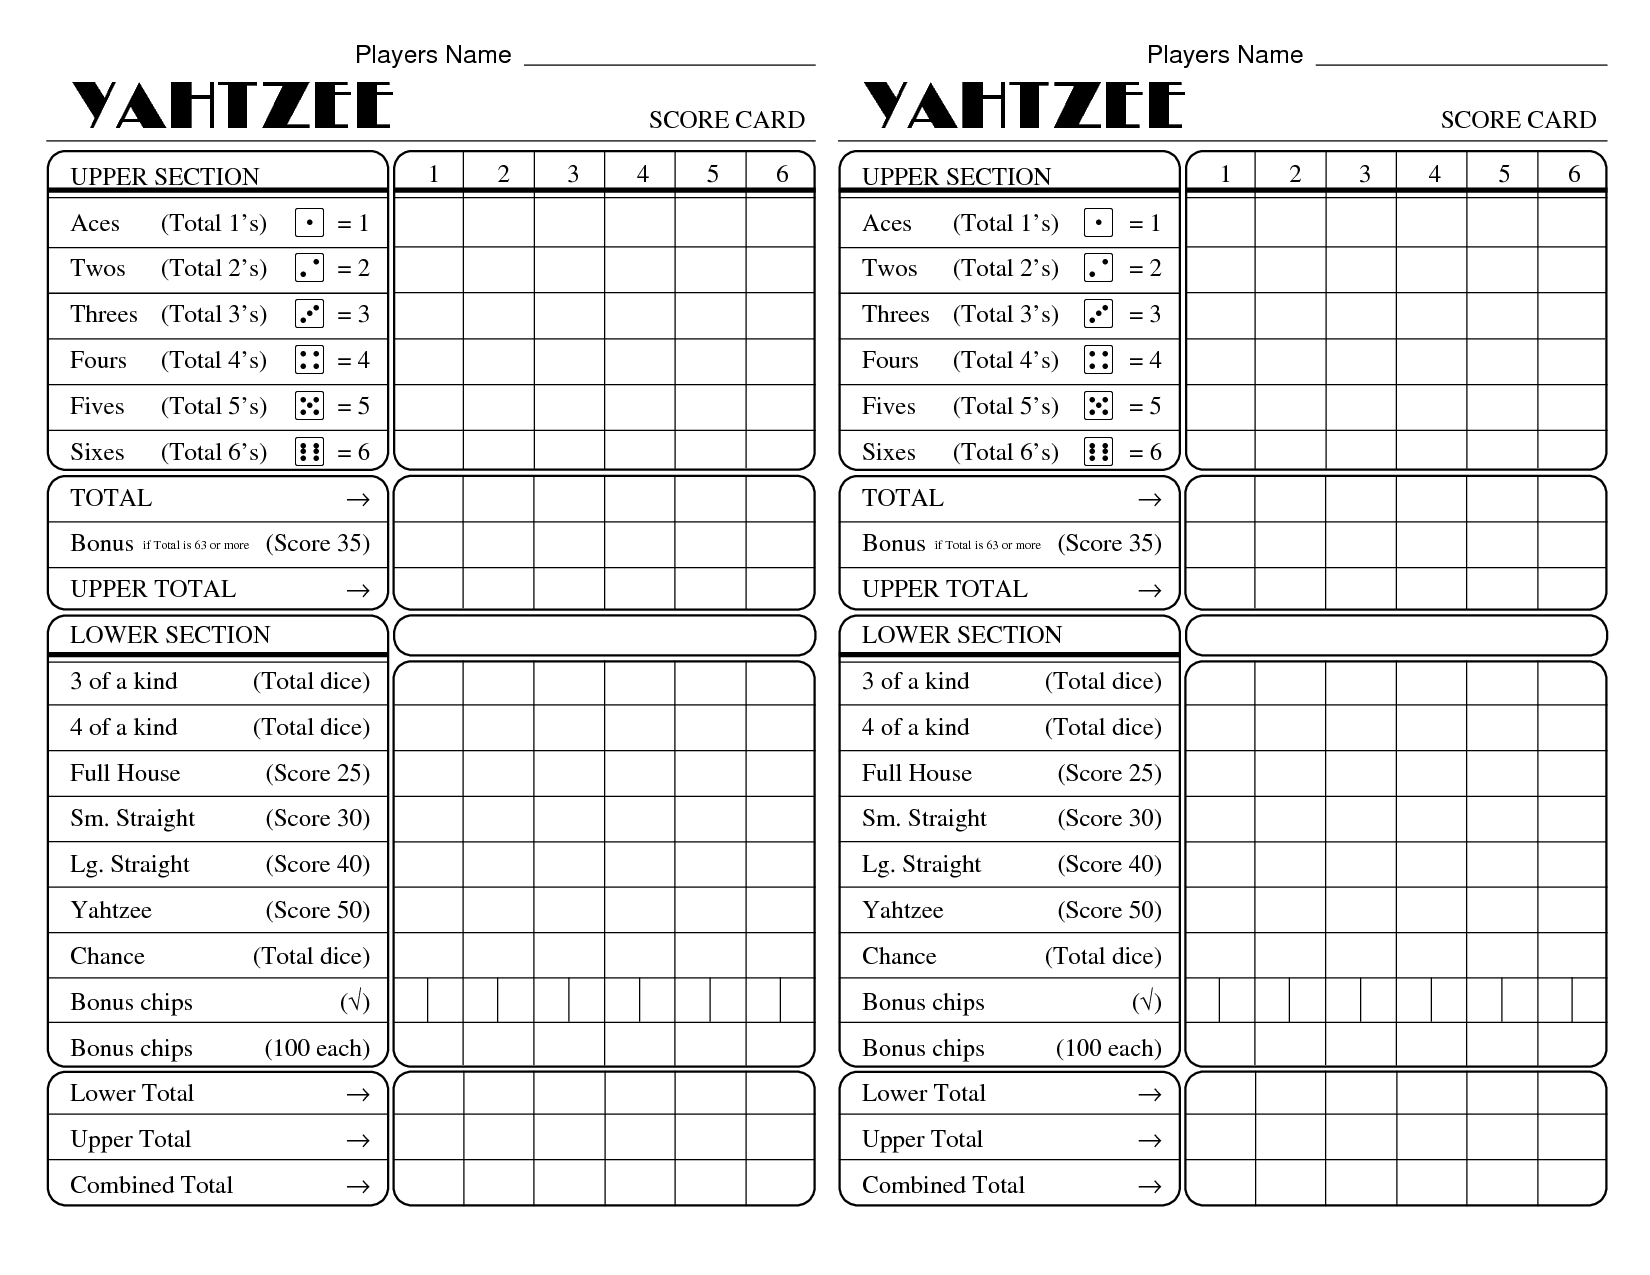 Yatzee Printable Score Sheets | Yahtzee Score Card | All For Fun - Free Printable Yahtzee Score Sheets